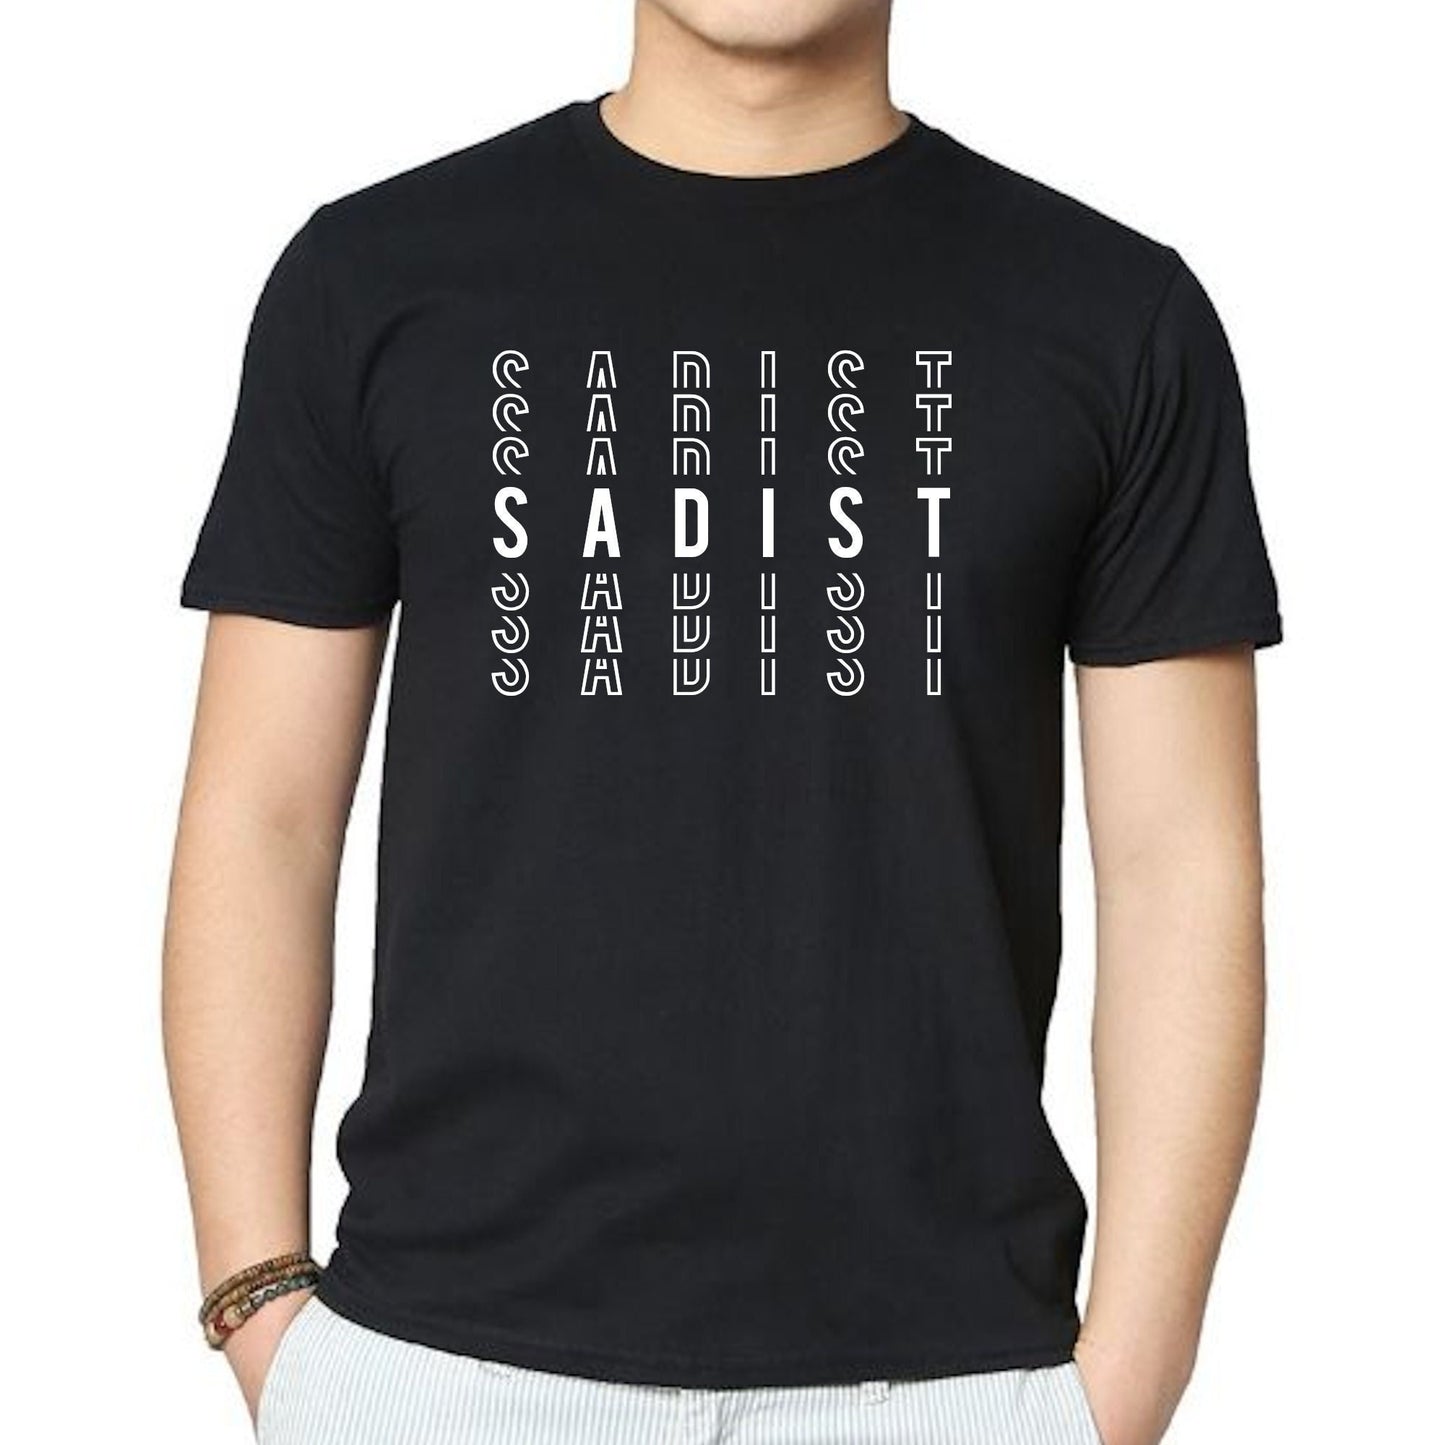 Sadist BDSM Shirt / Dominant and Submissive Kink T-Shirt